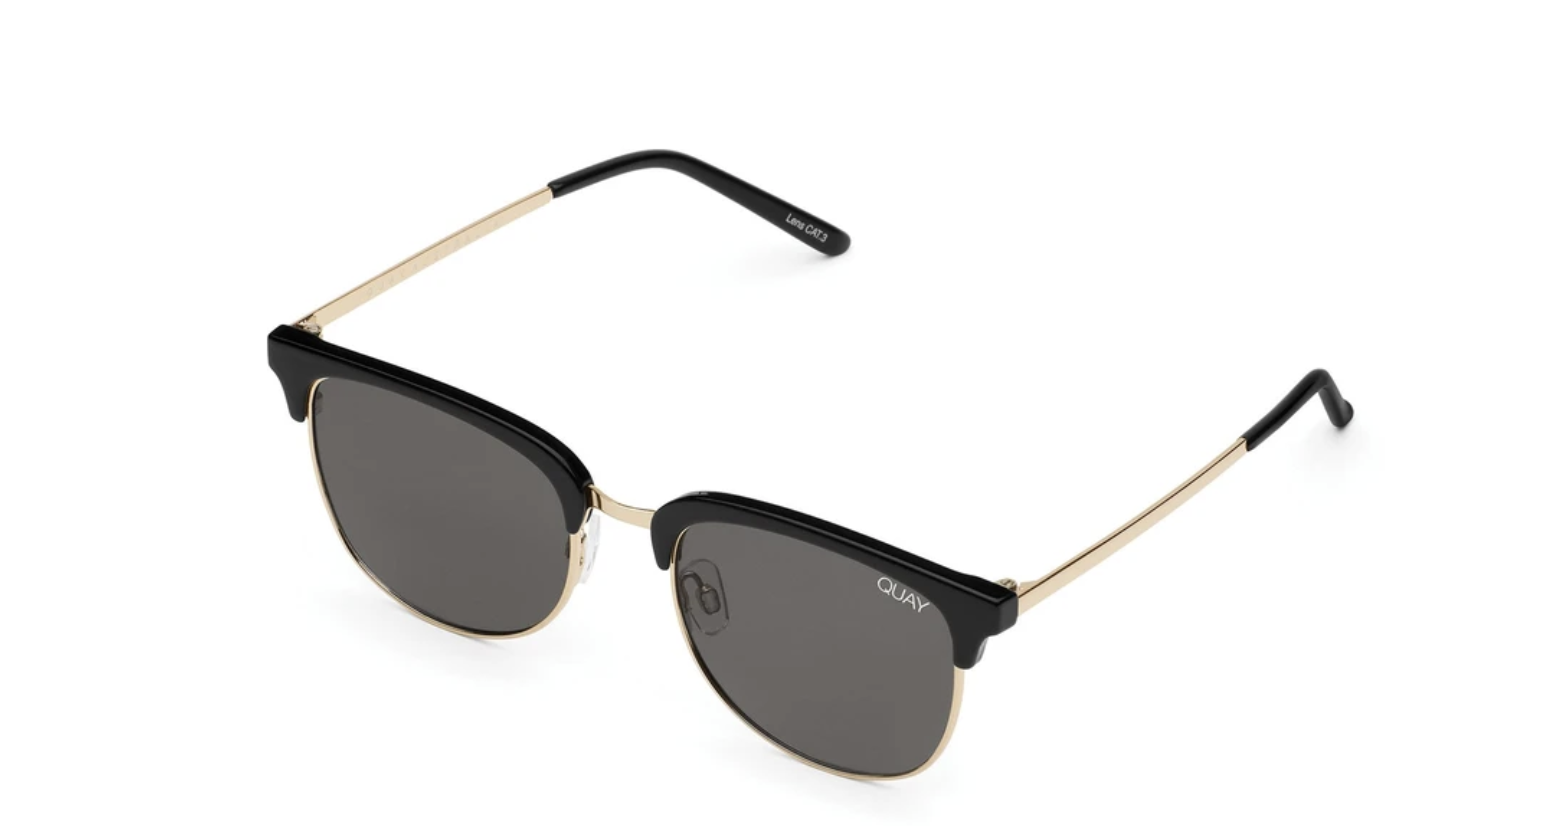 kristin-cavallari-loves-these-affordable-sunglasses-from-quay-australia